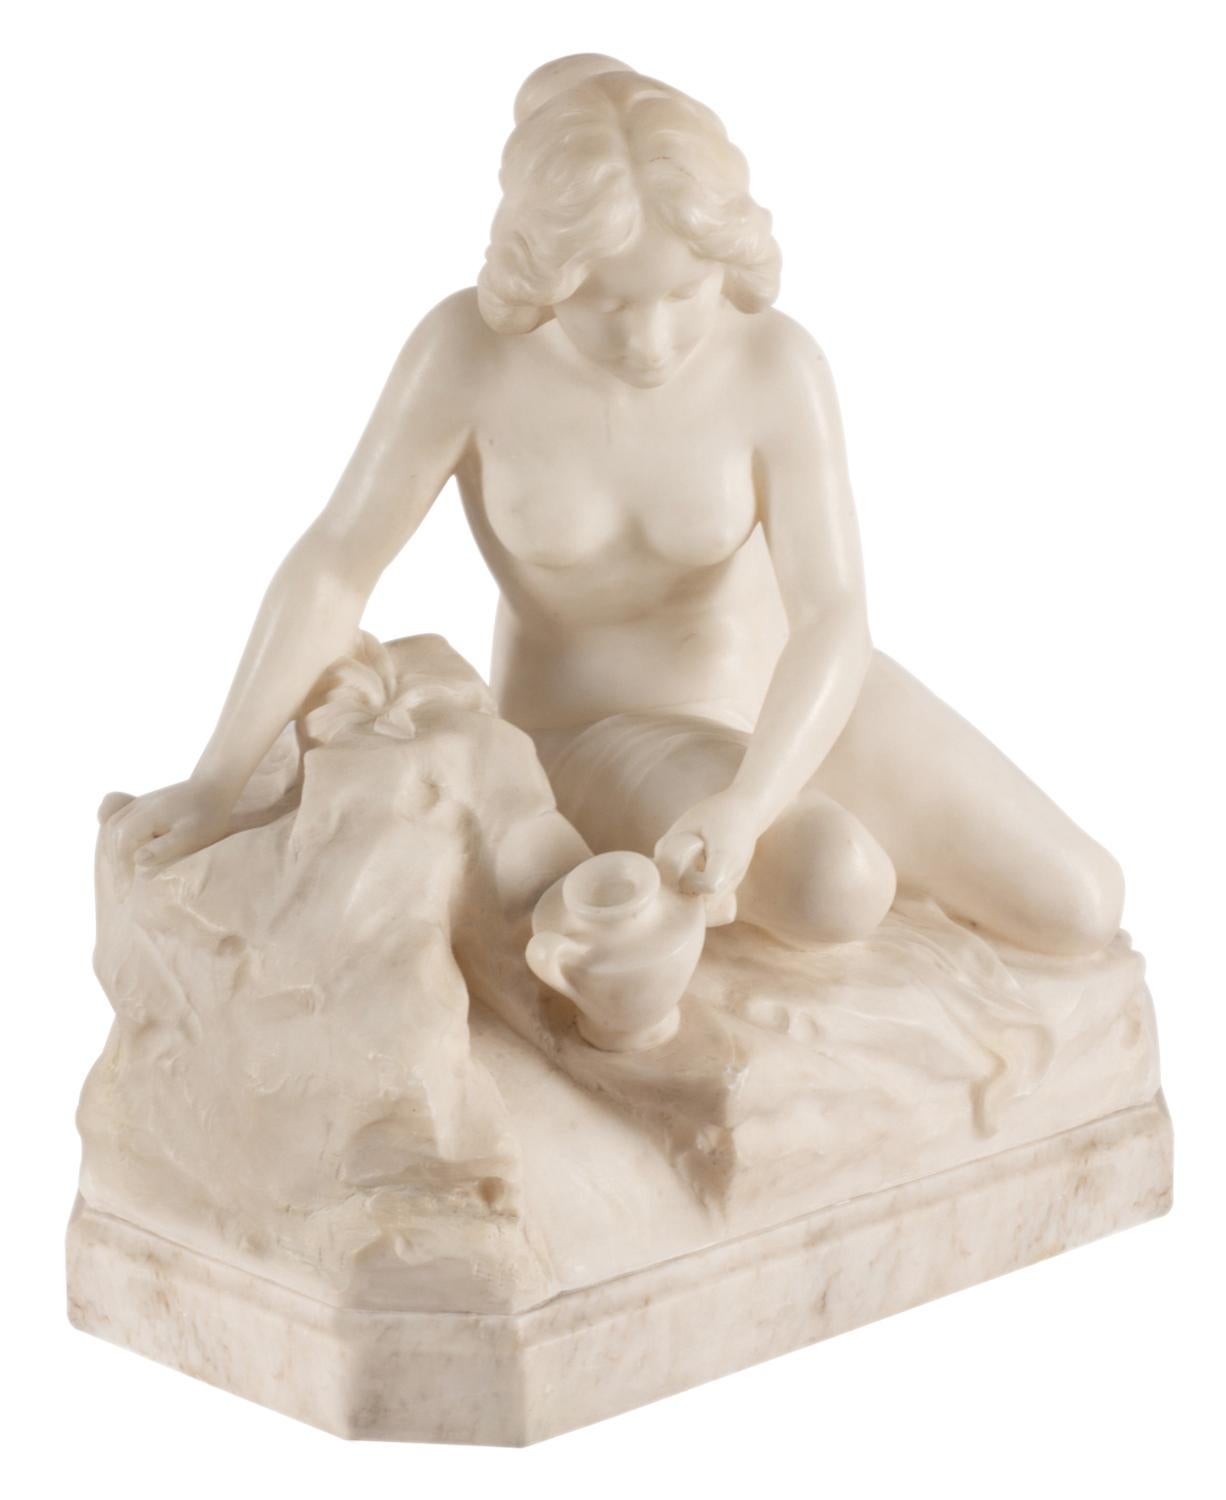 19th century marble sculpture